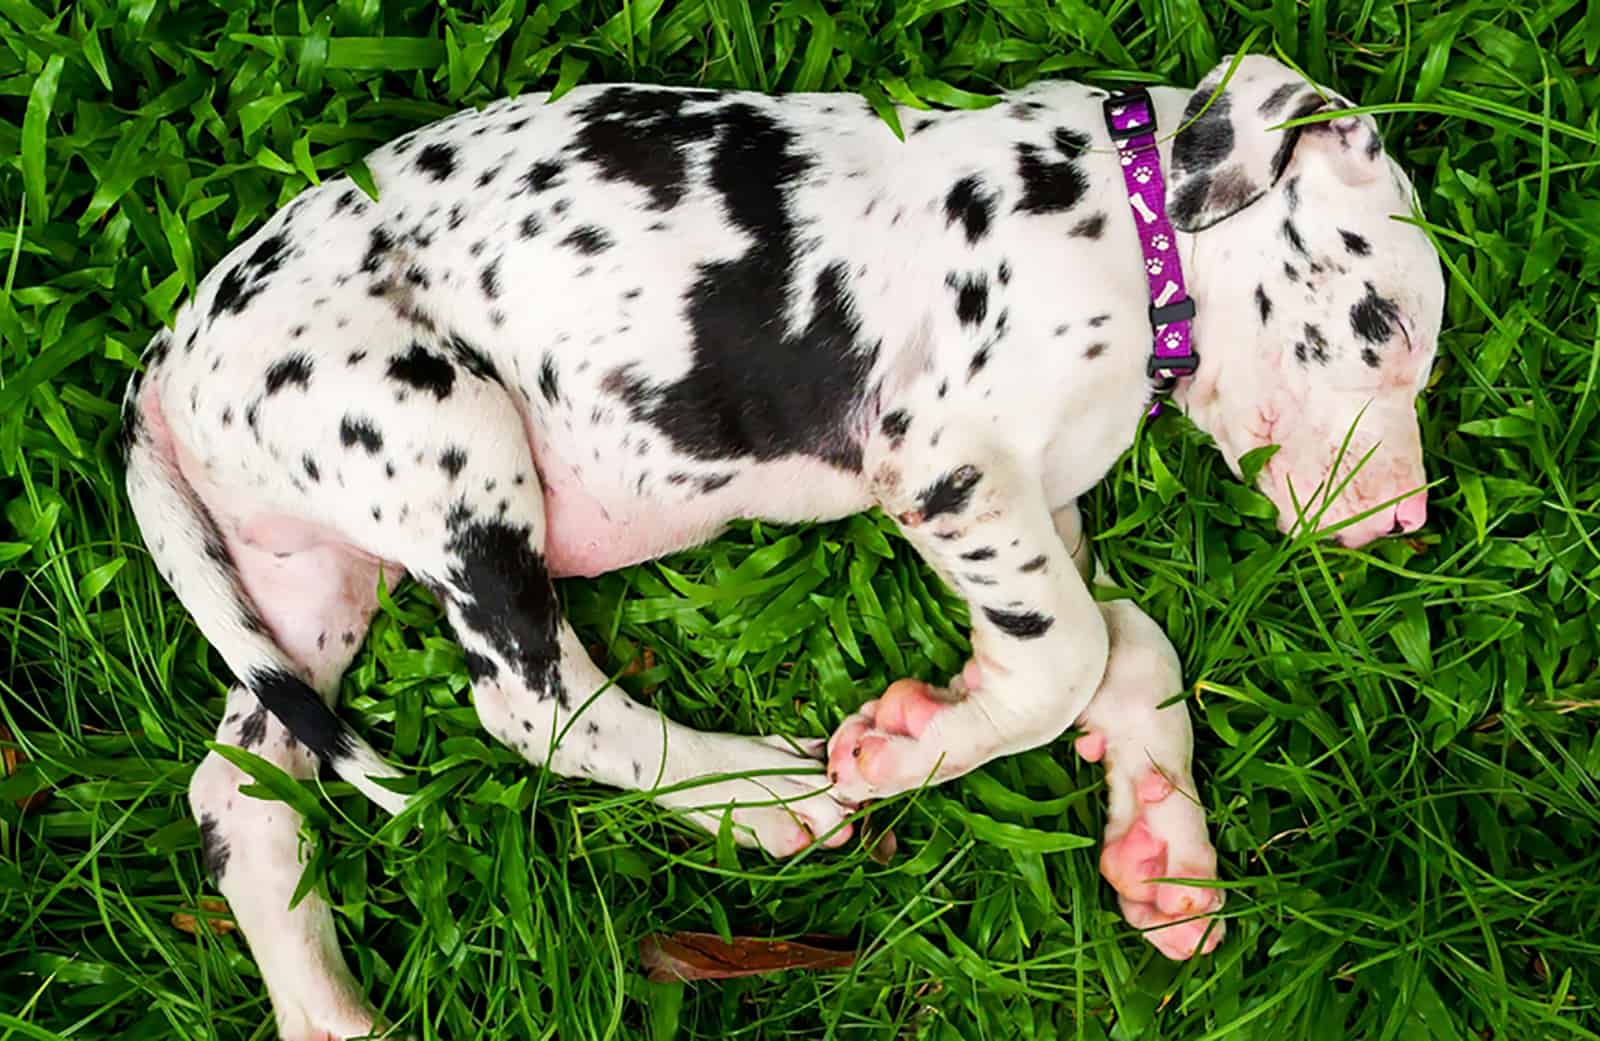 harlequin great dane puppy sleeping in the grass